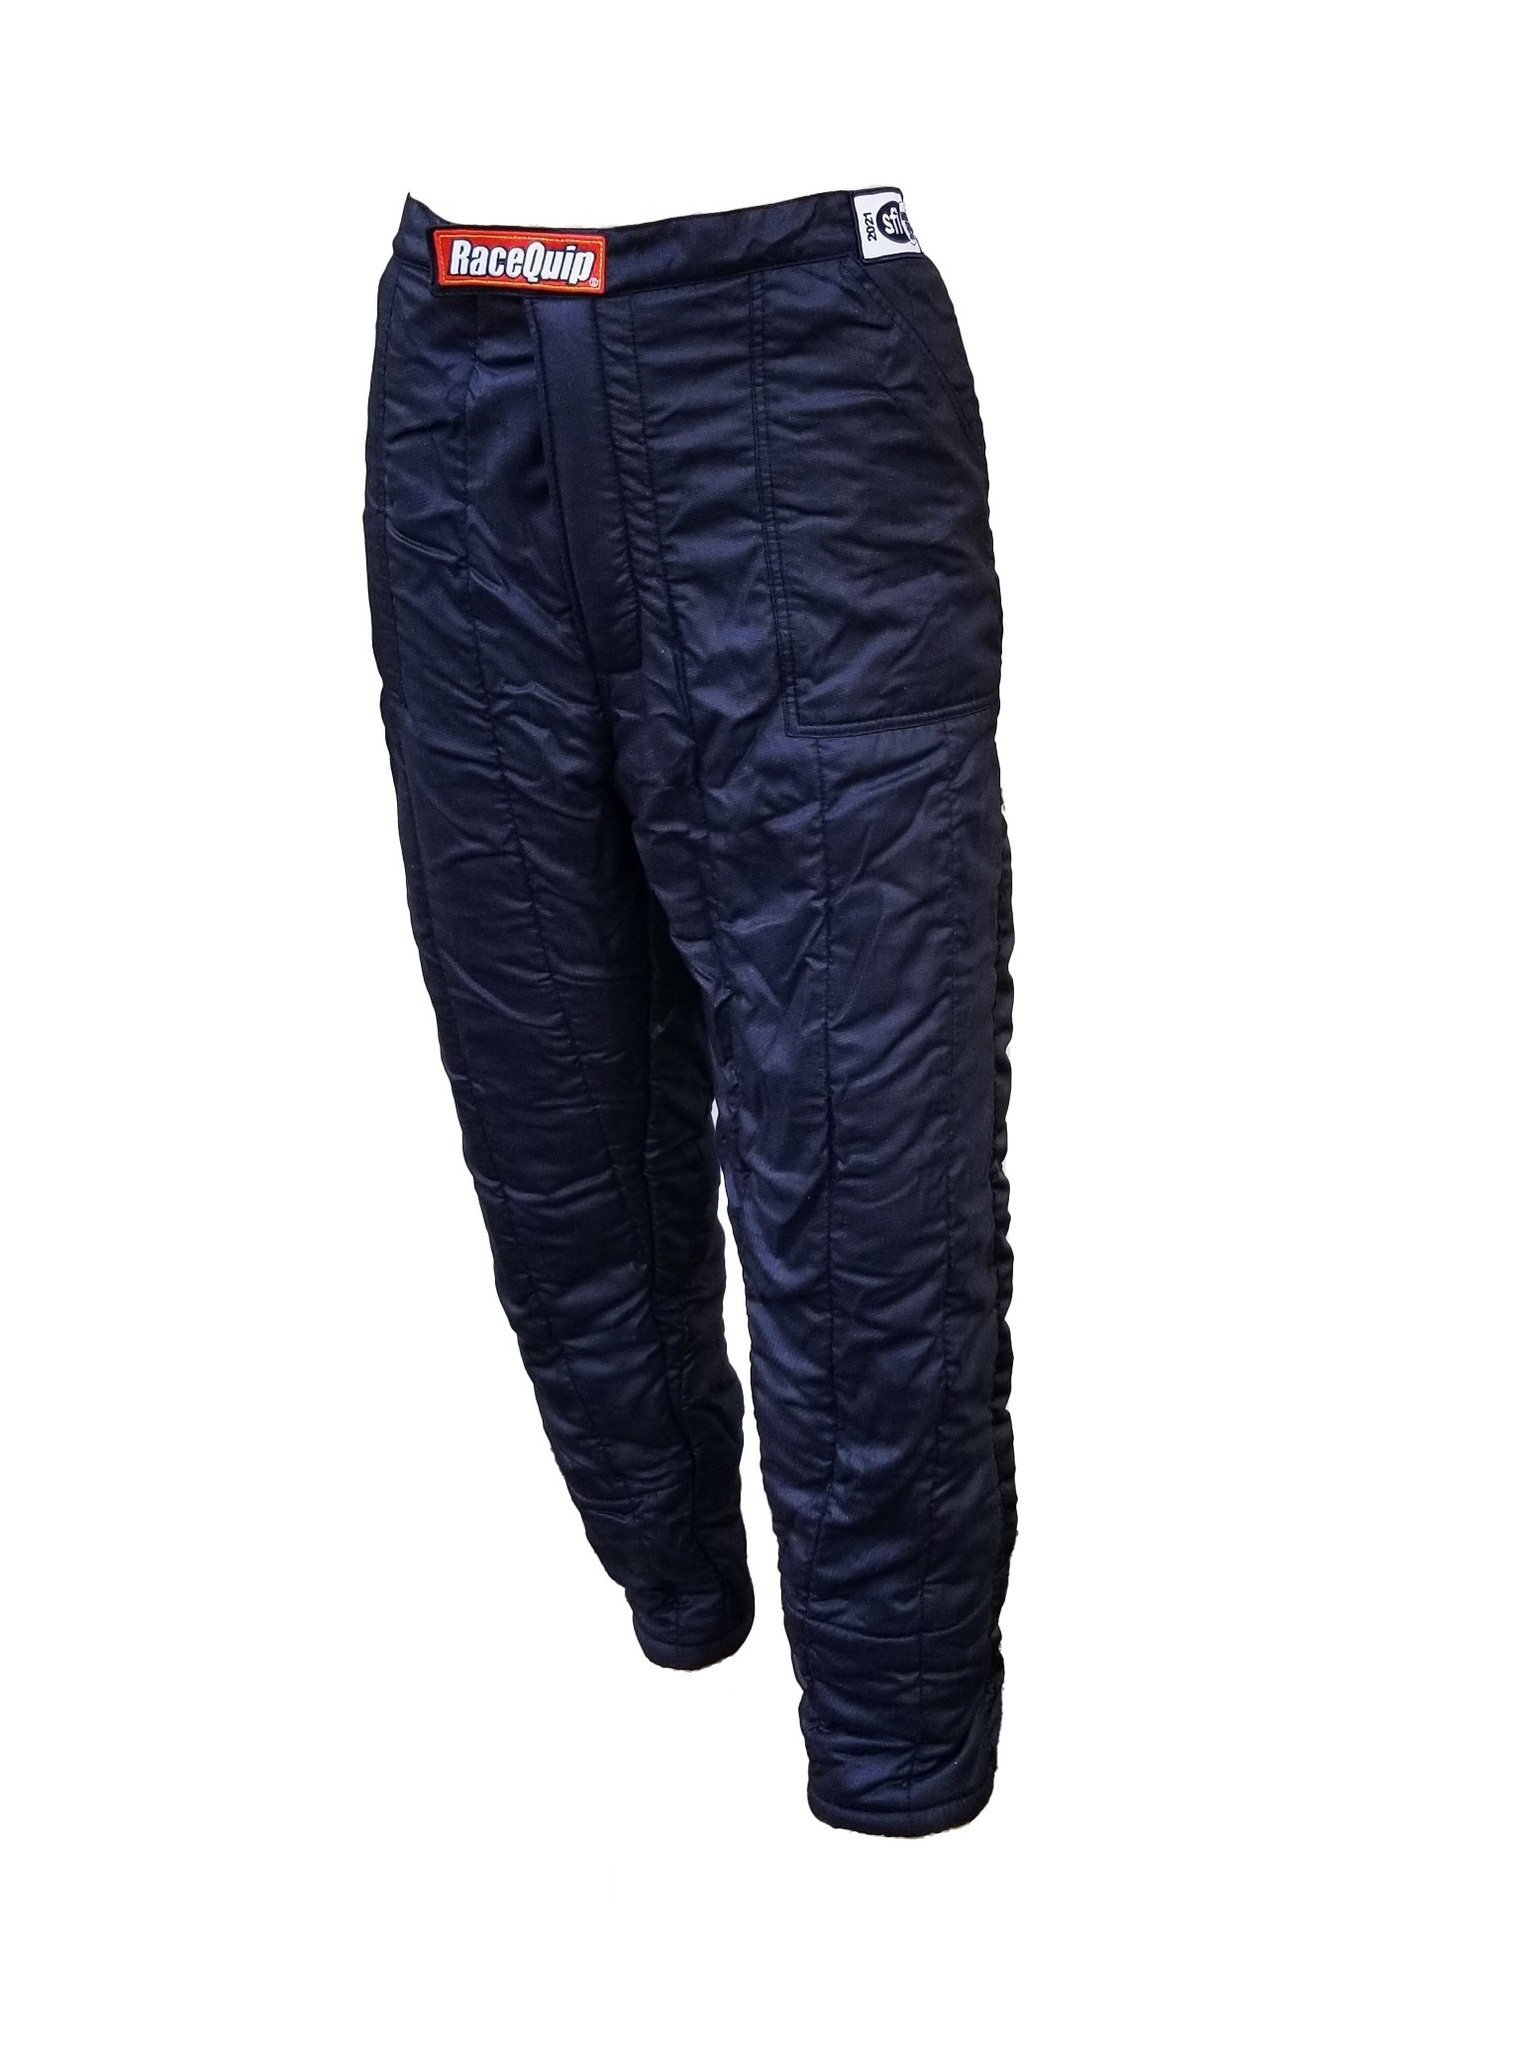 Racequip 91929939 Driving Pants, SFI 3.2A/15, Multiple Layer, Aramid Fabric / Nomex, Black, Medium, Each